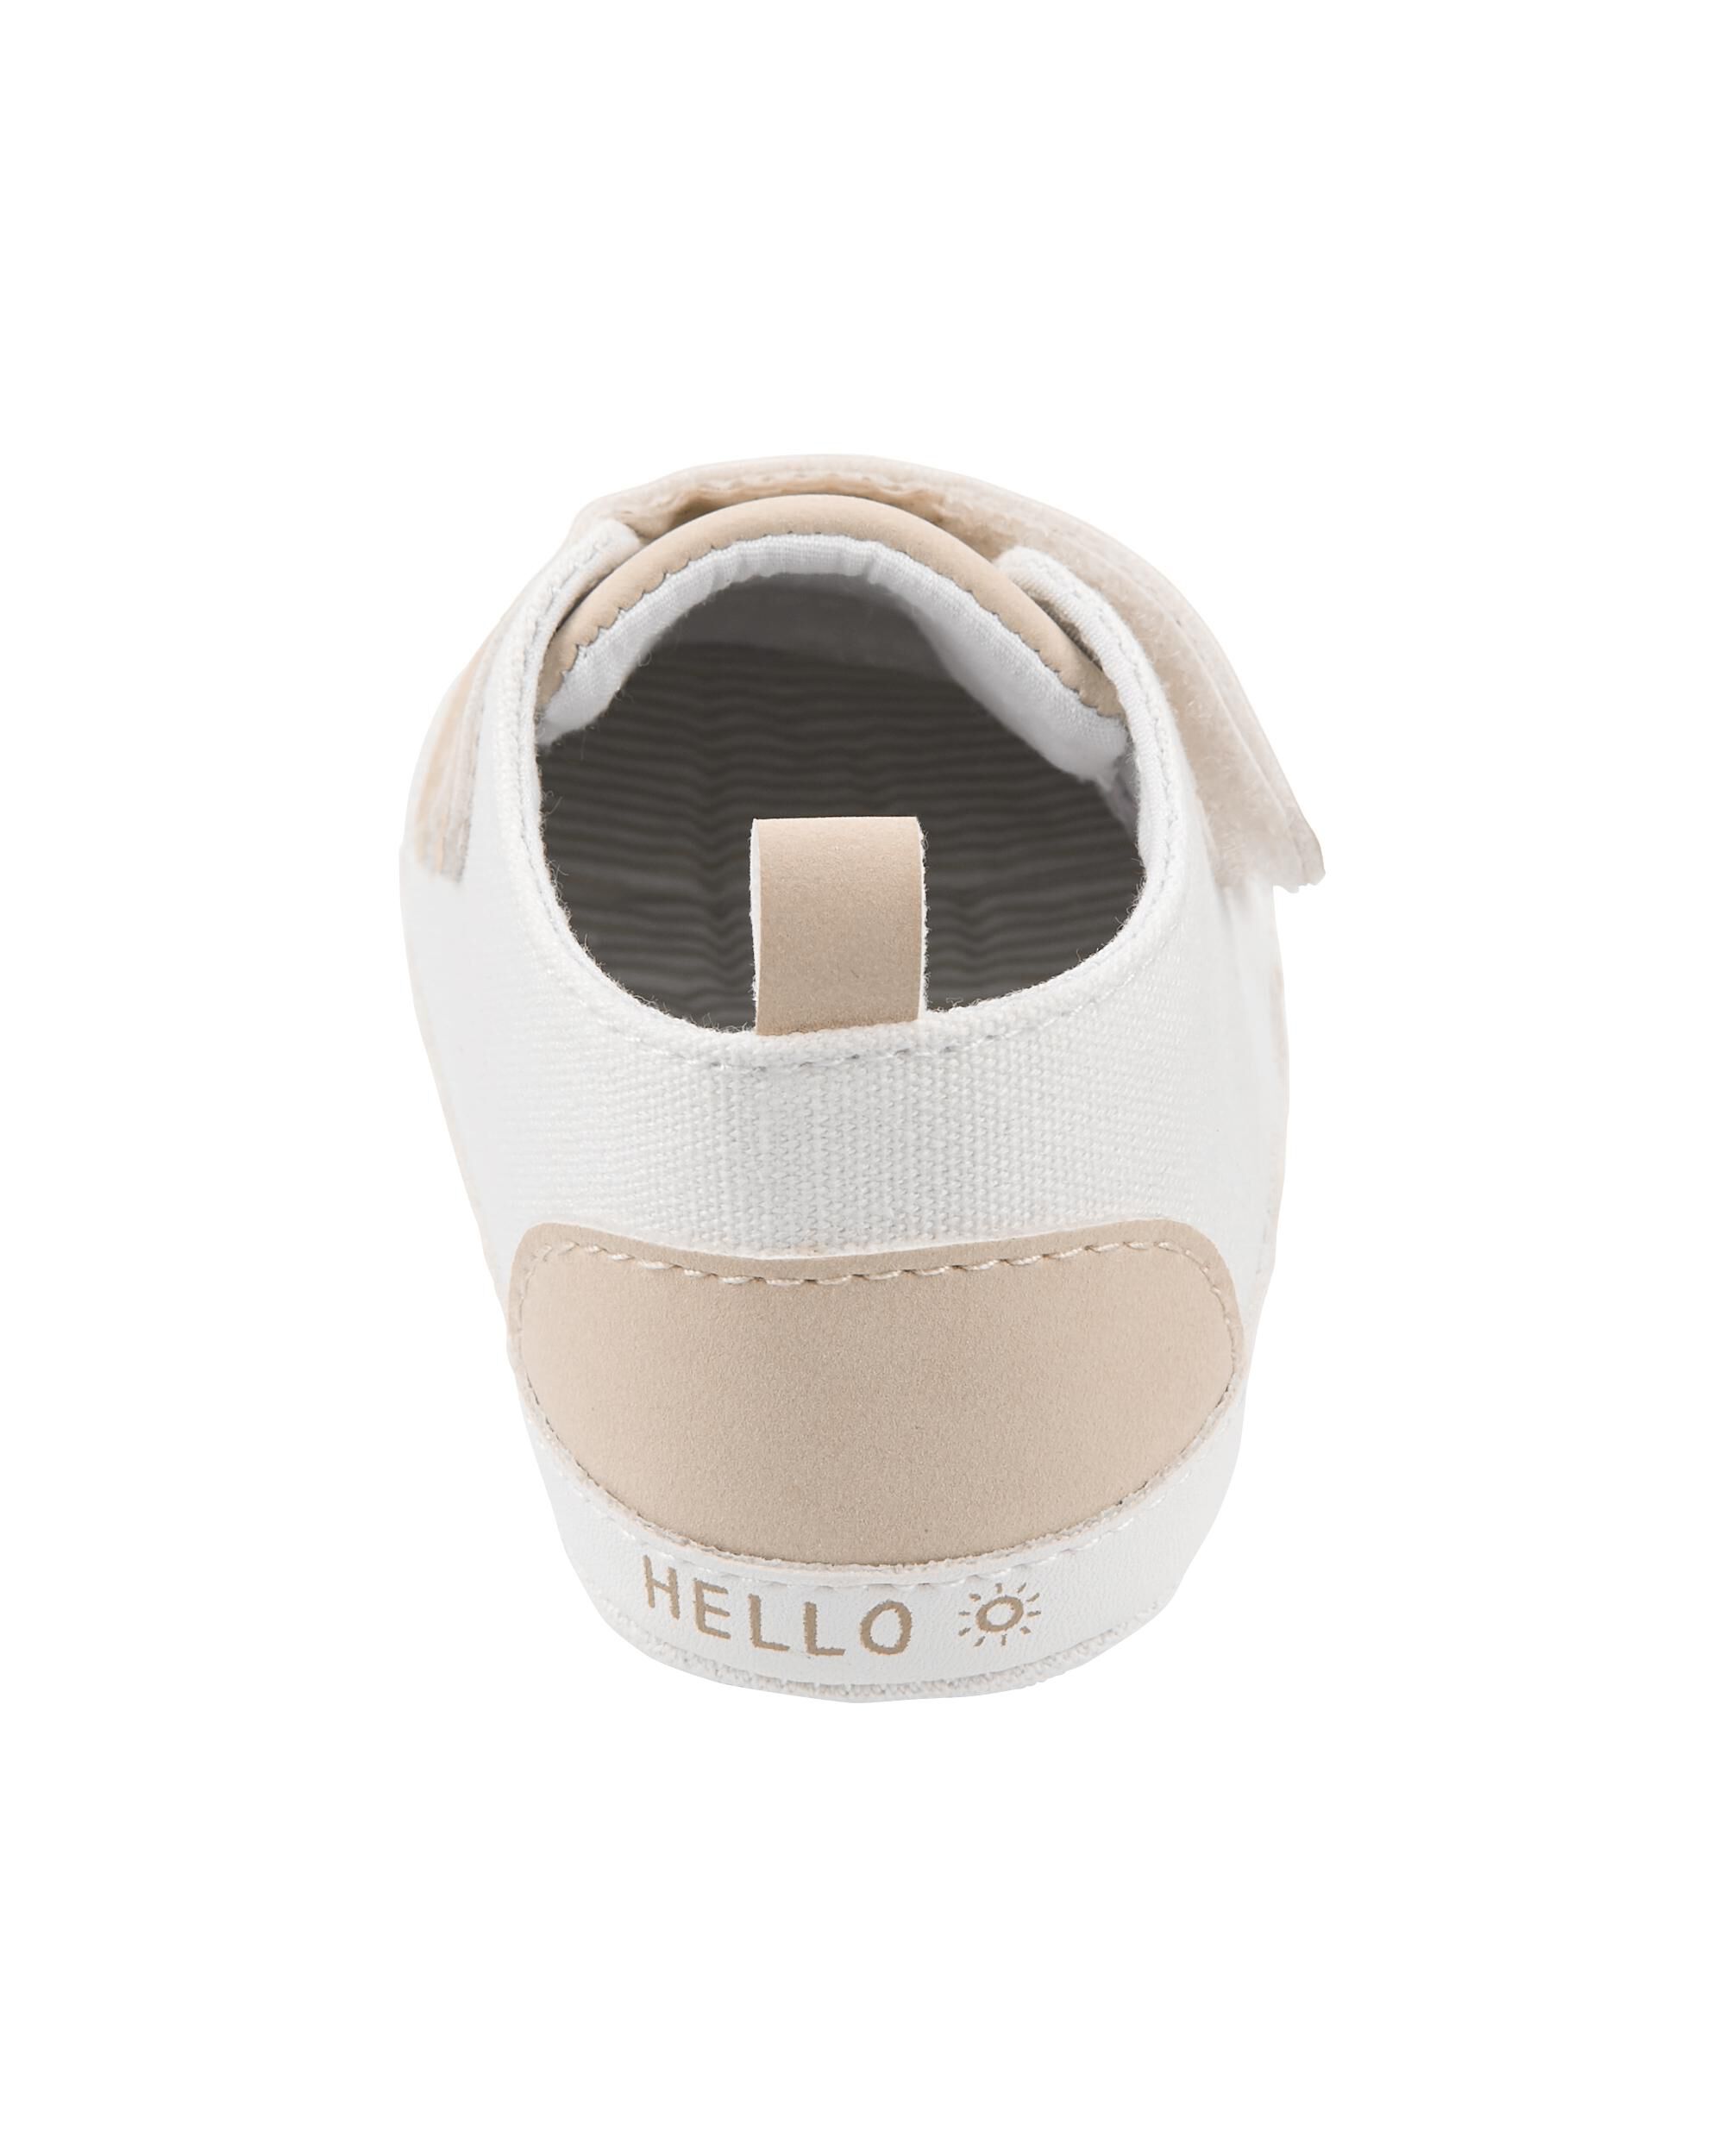 White Baby Slip-On Sneakers | Carter's Oshkosh Canada